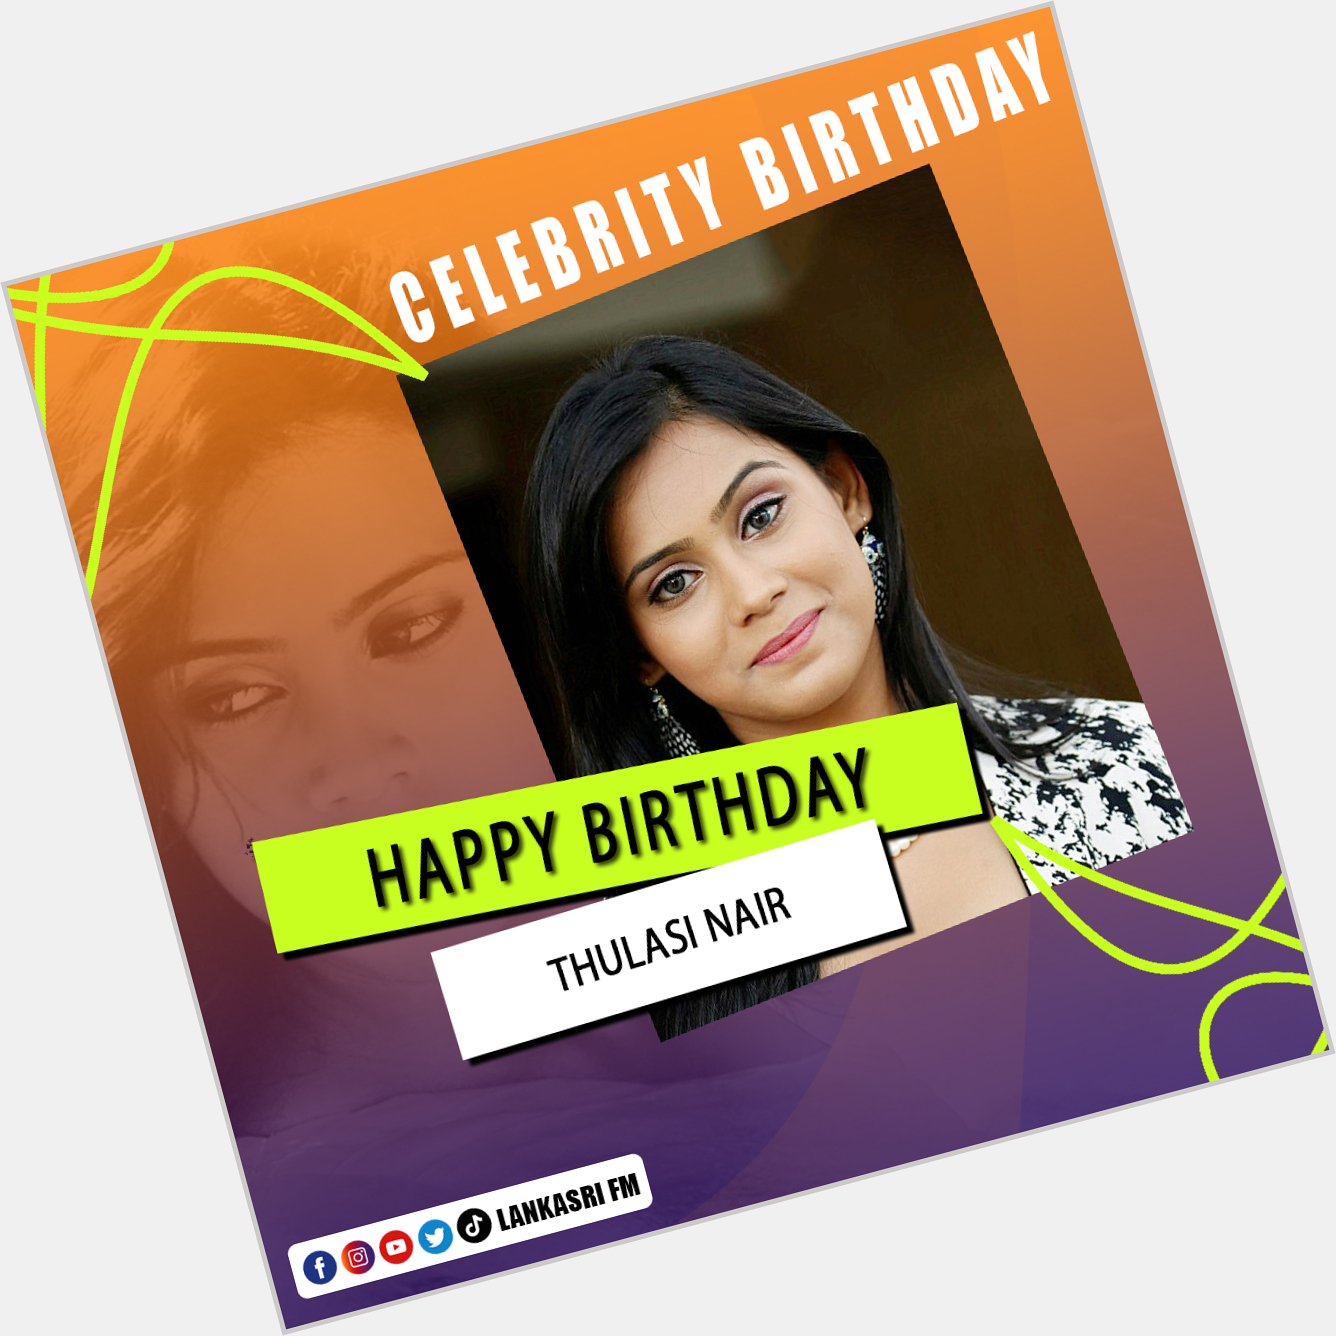 Happy Birthday Thulasi Nair! 